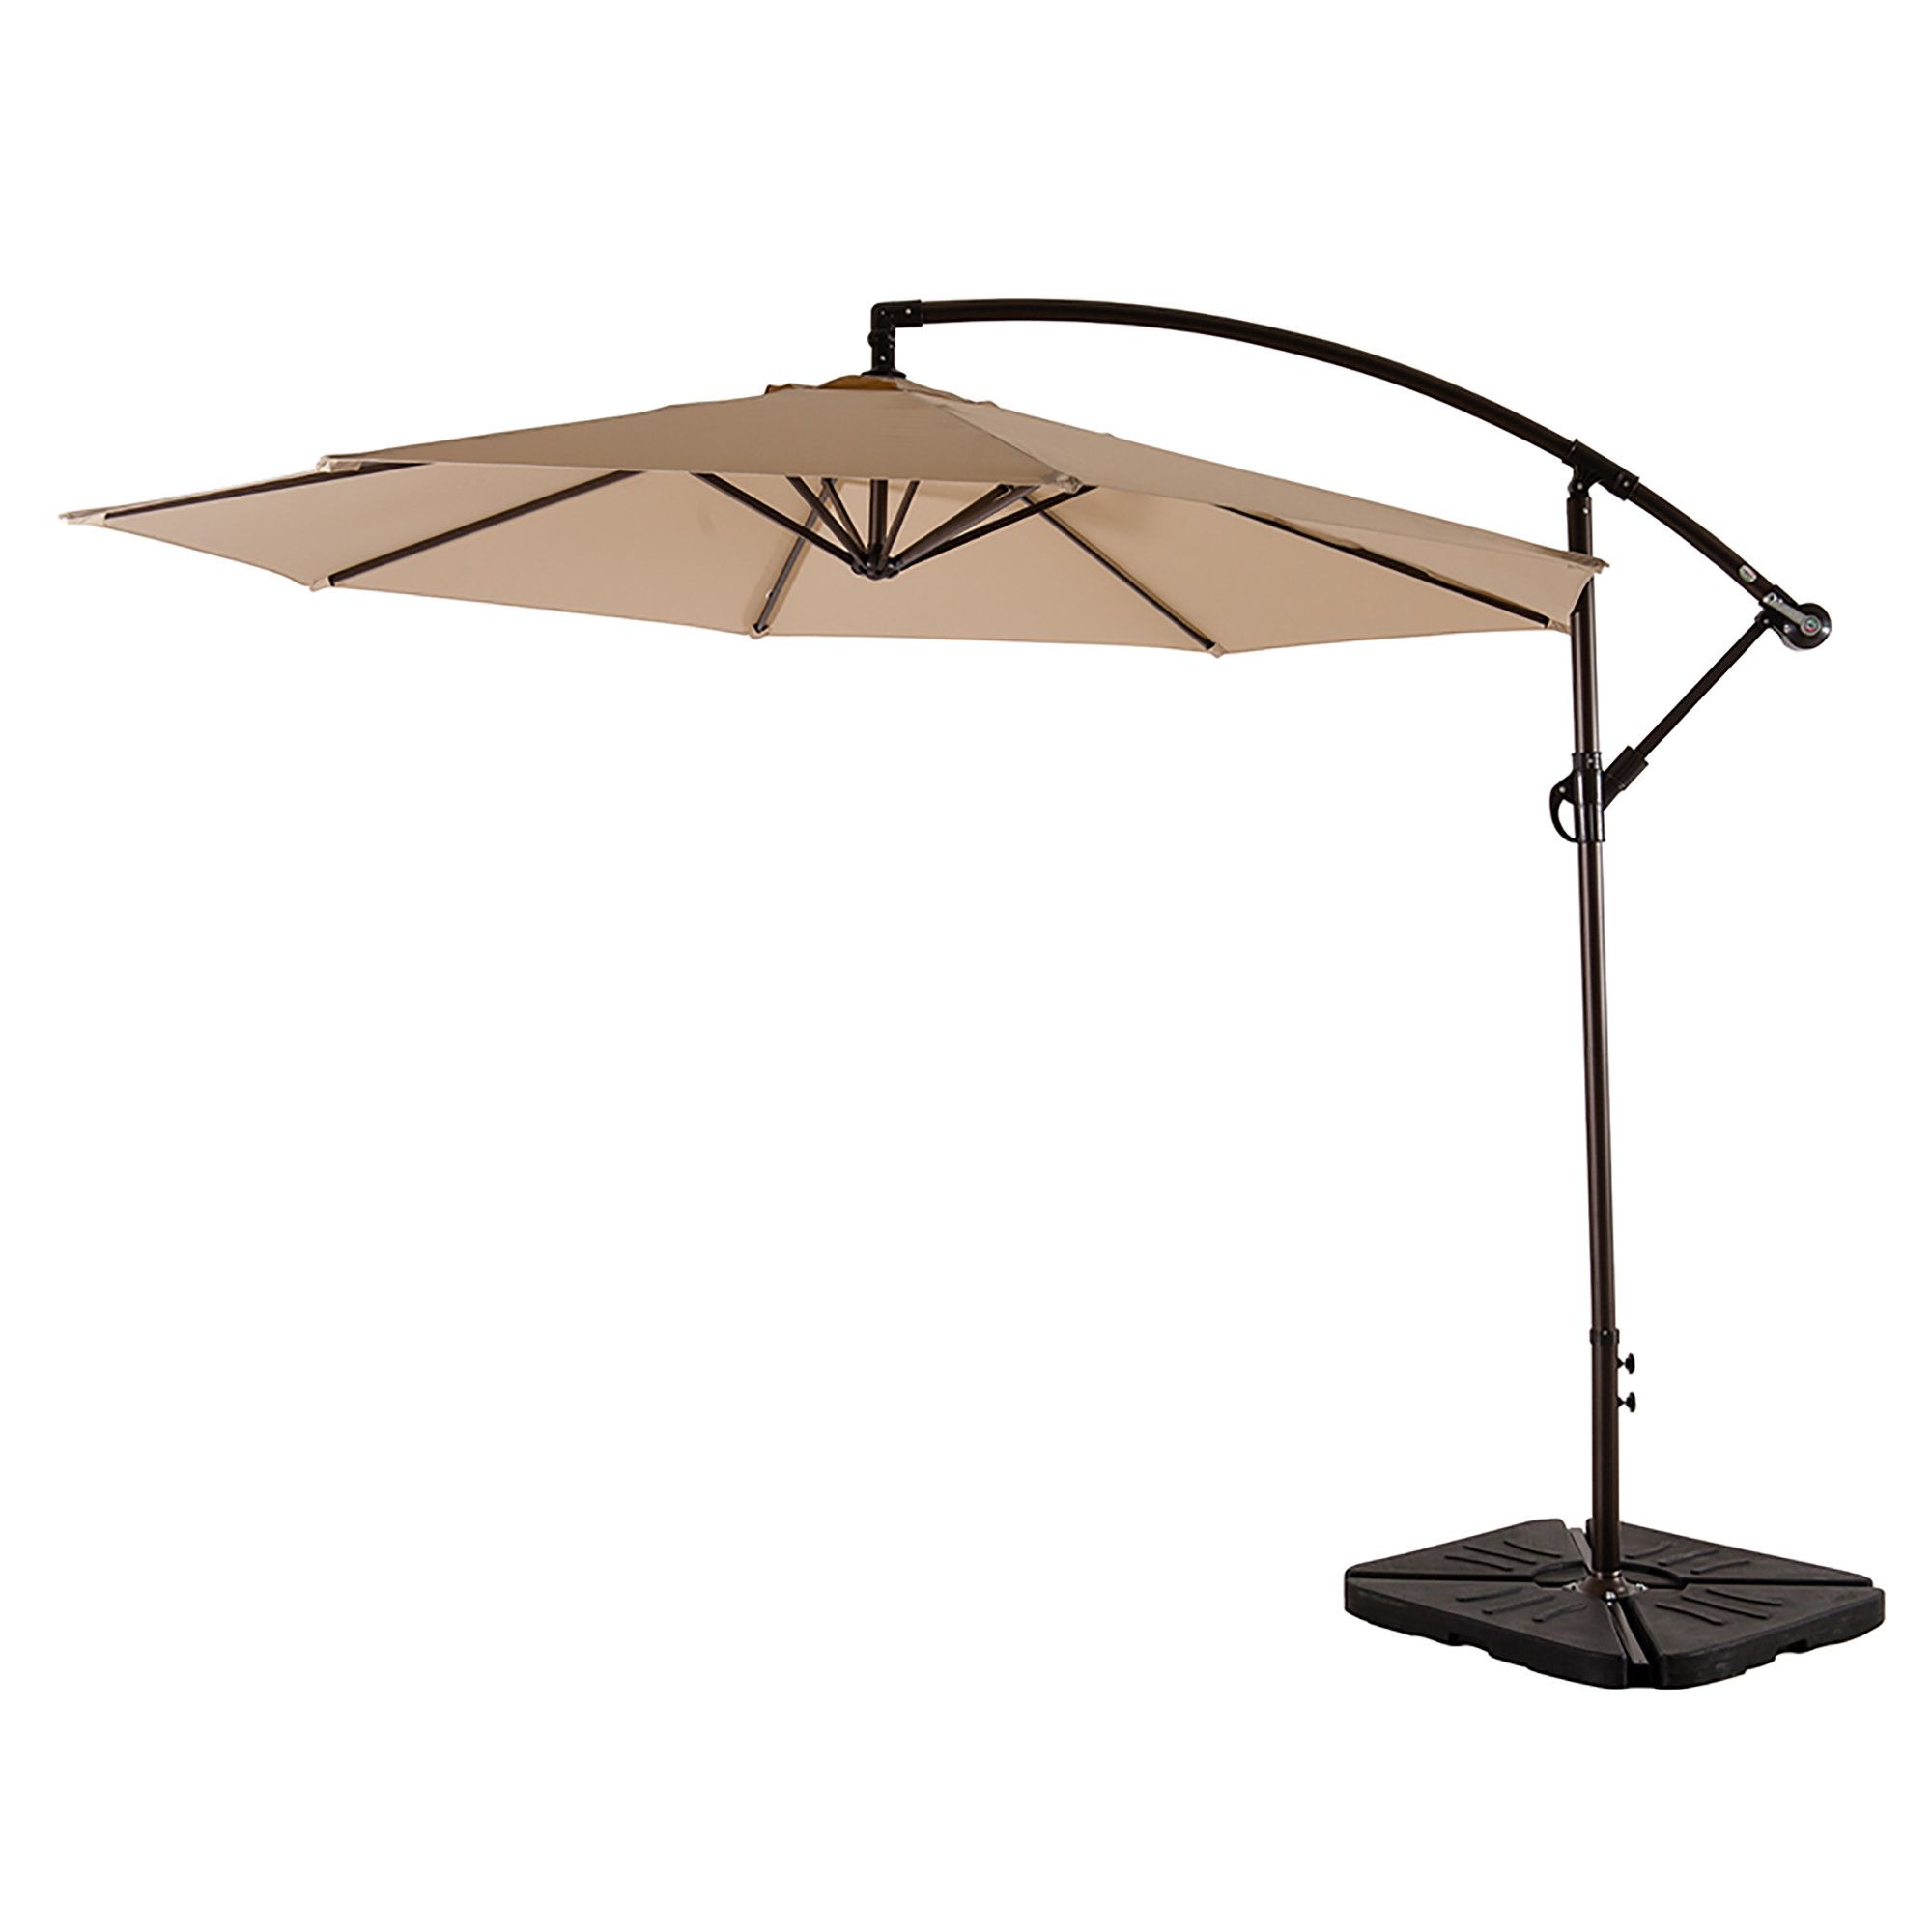 Kizzie Market 10' Cantilever Umbrella With Current Ketcham Cantilever Umbrellas (View 6 of 20)